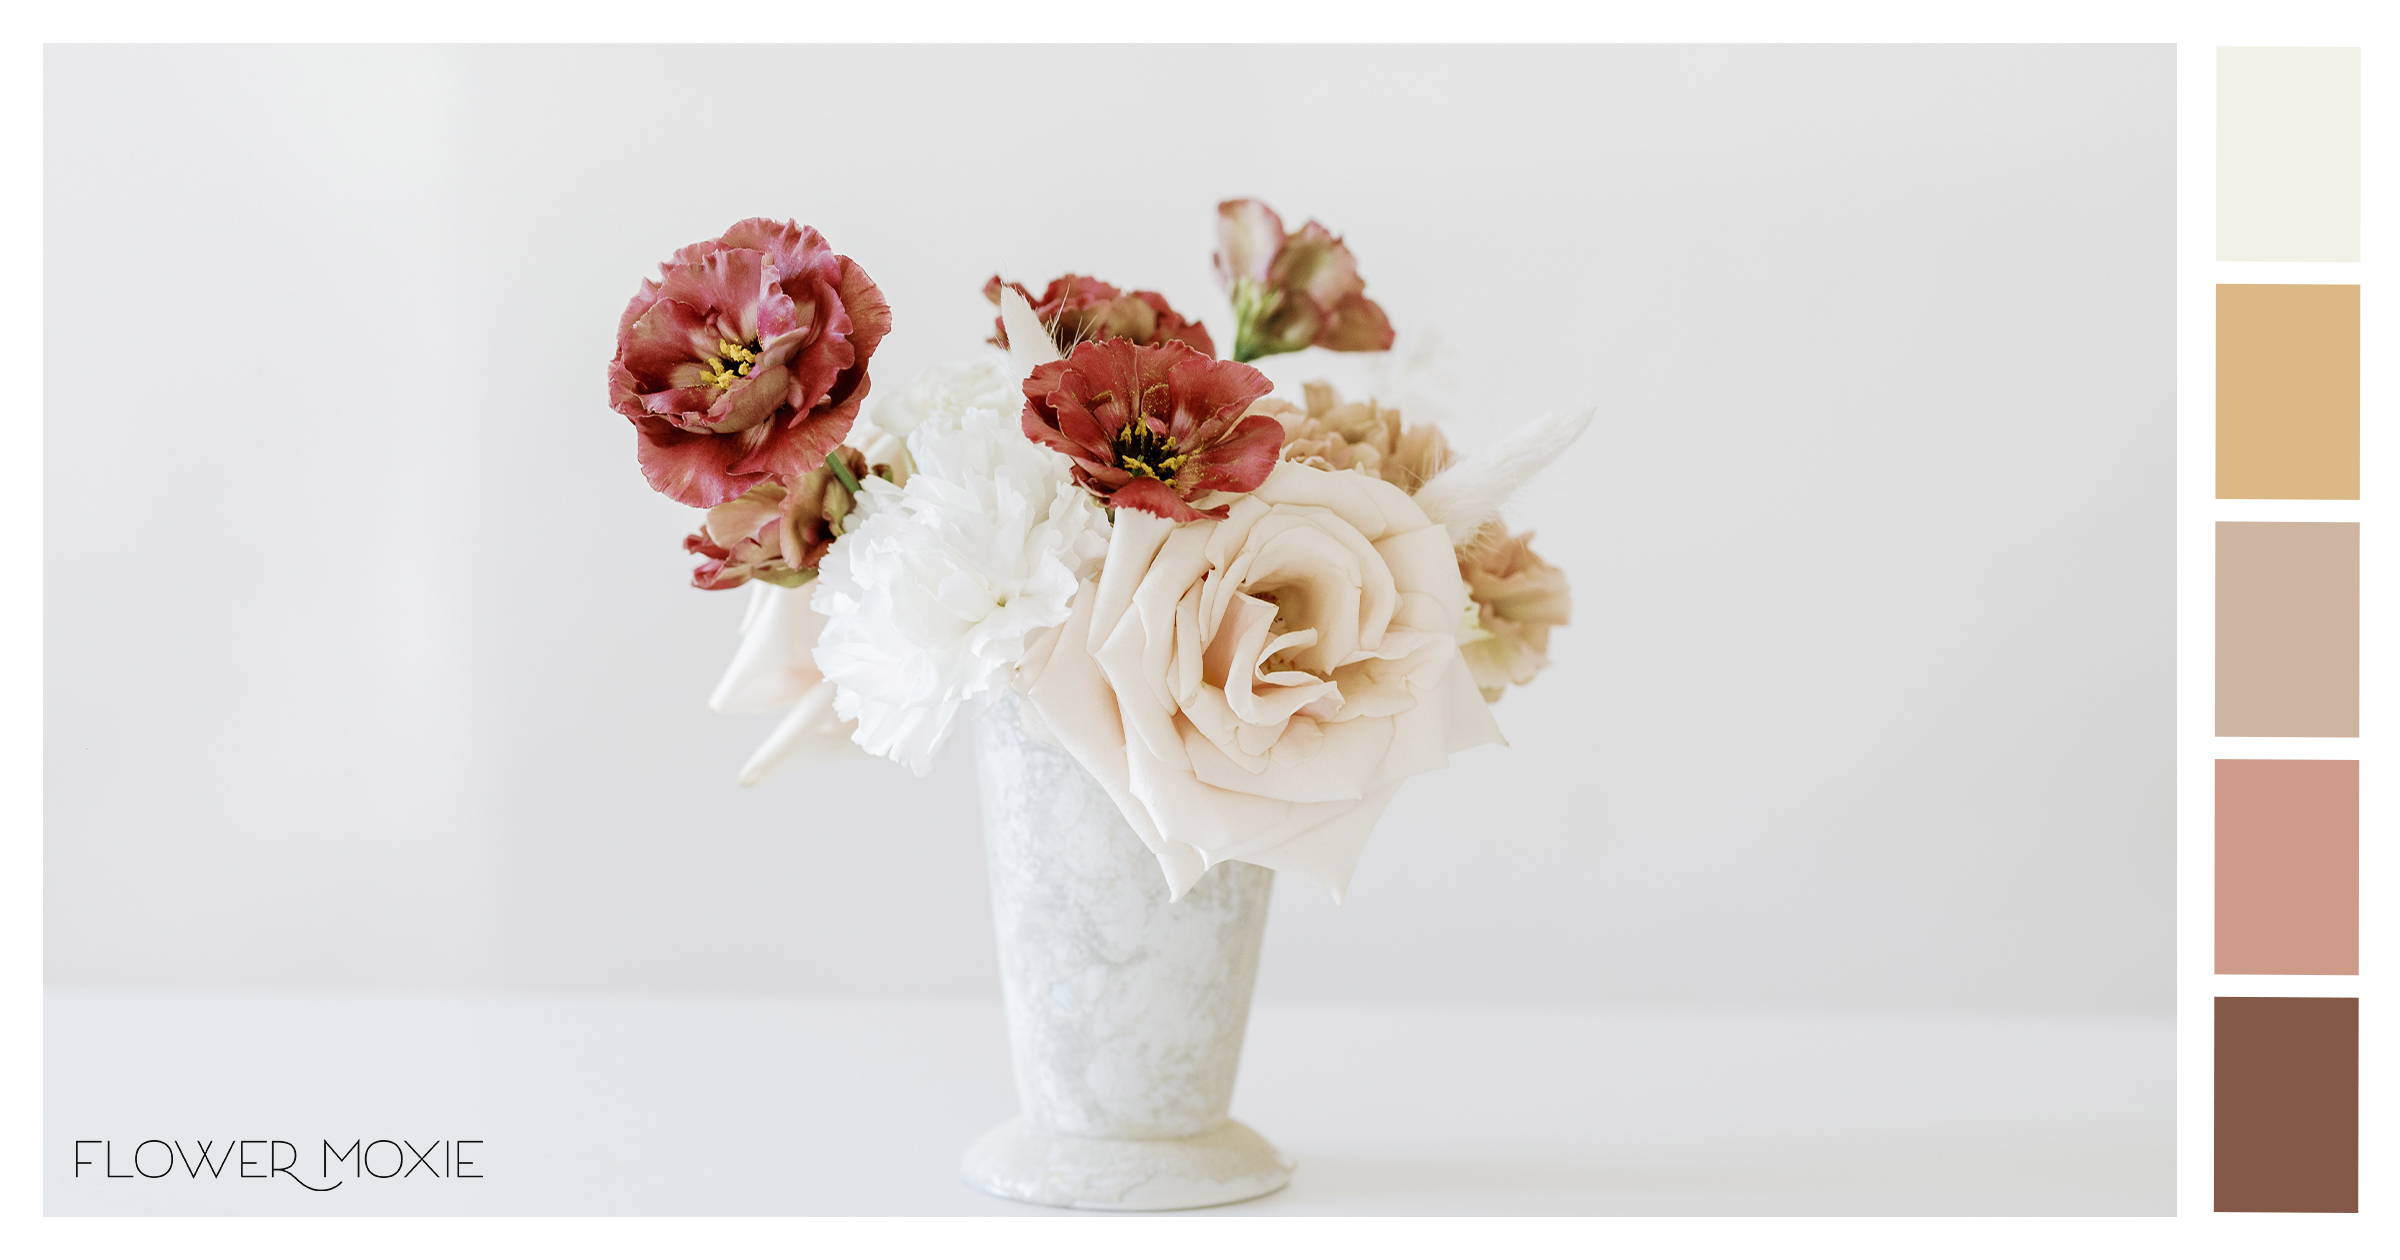 canyon rose diy fresh floral kits online